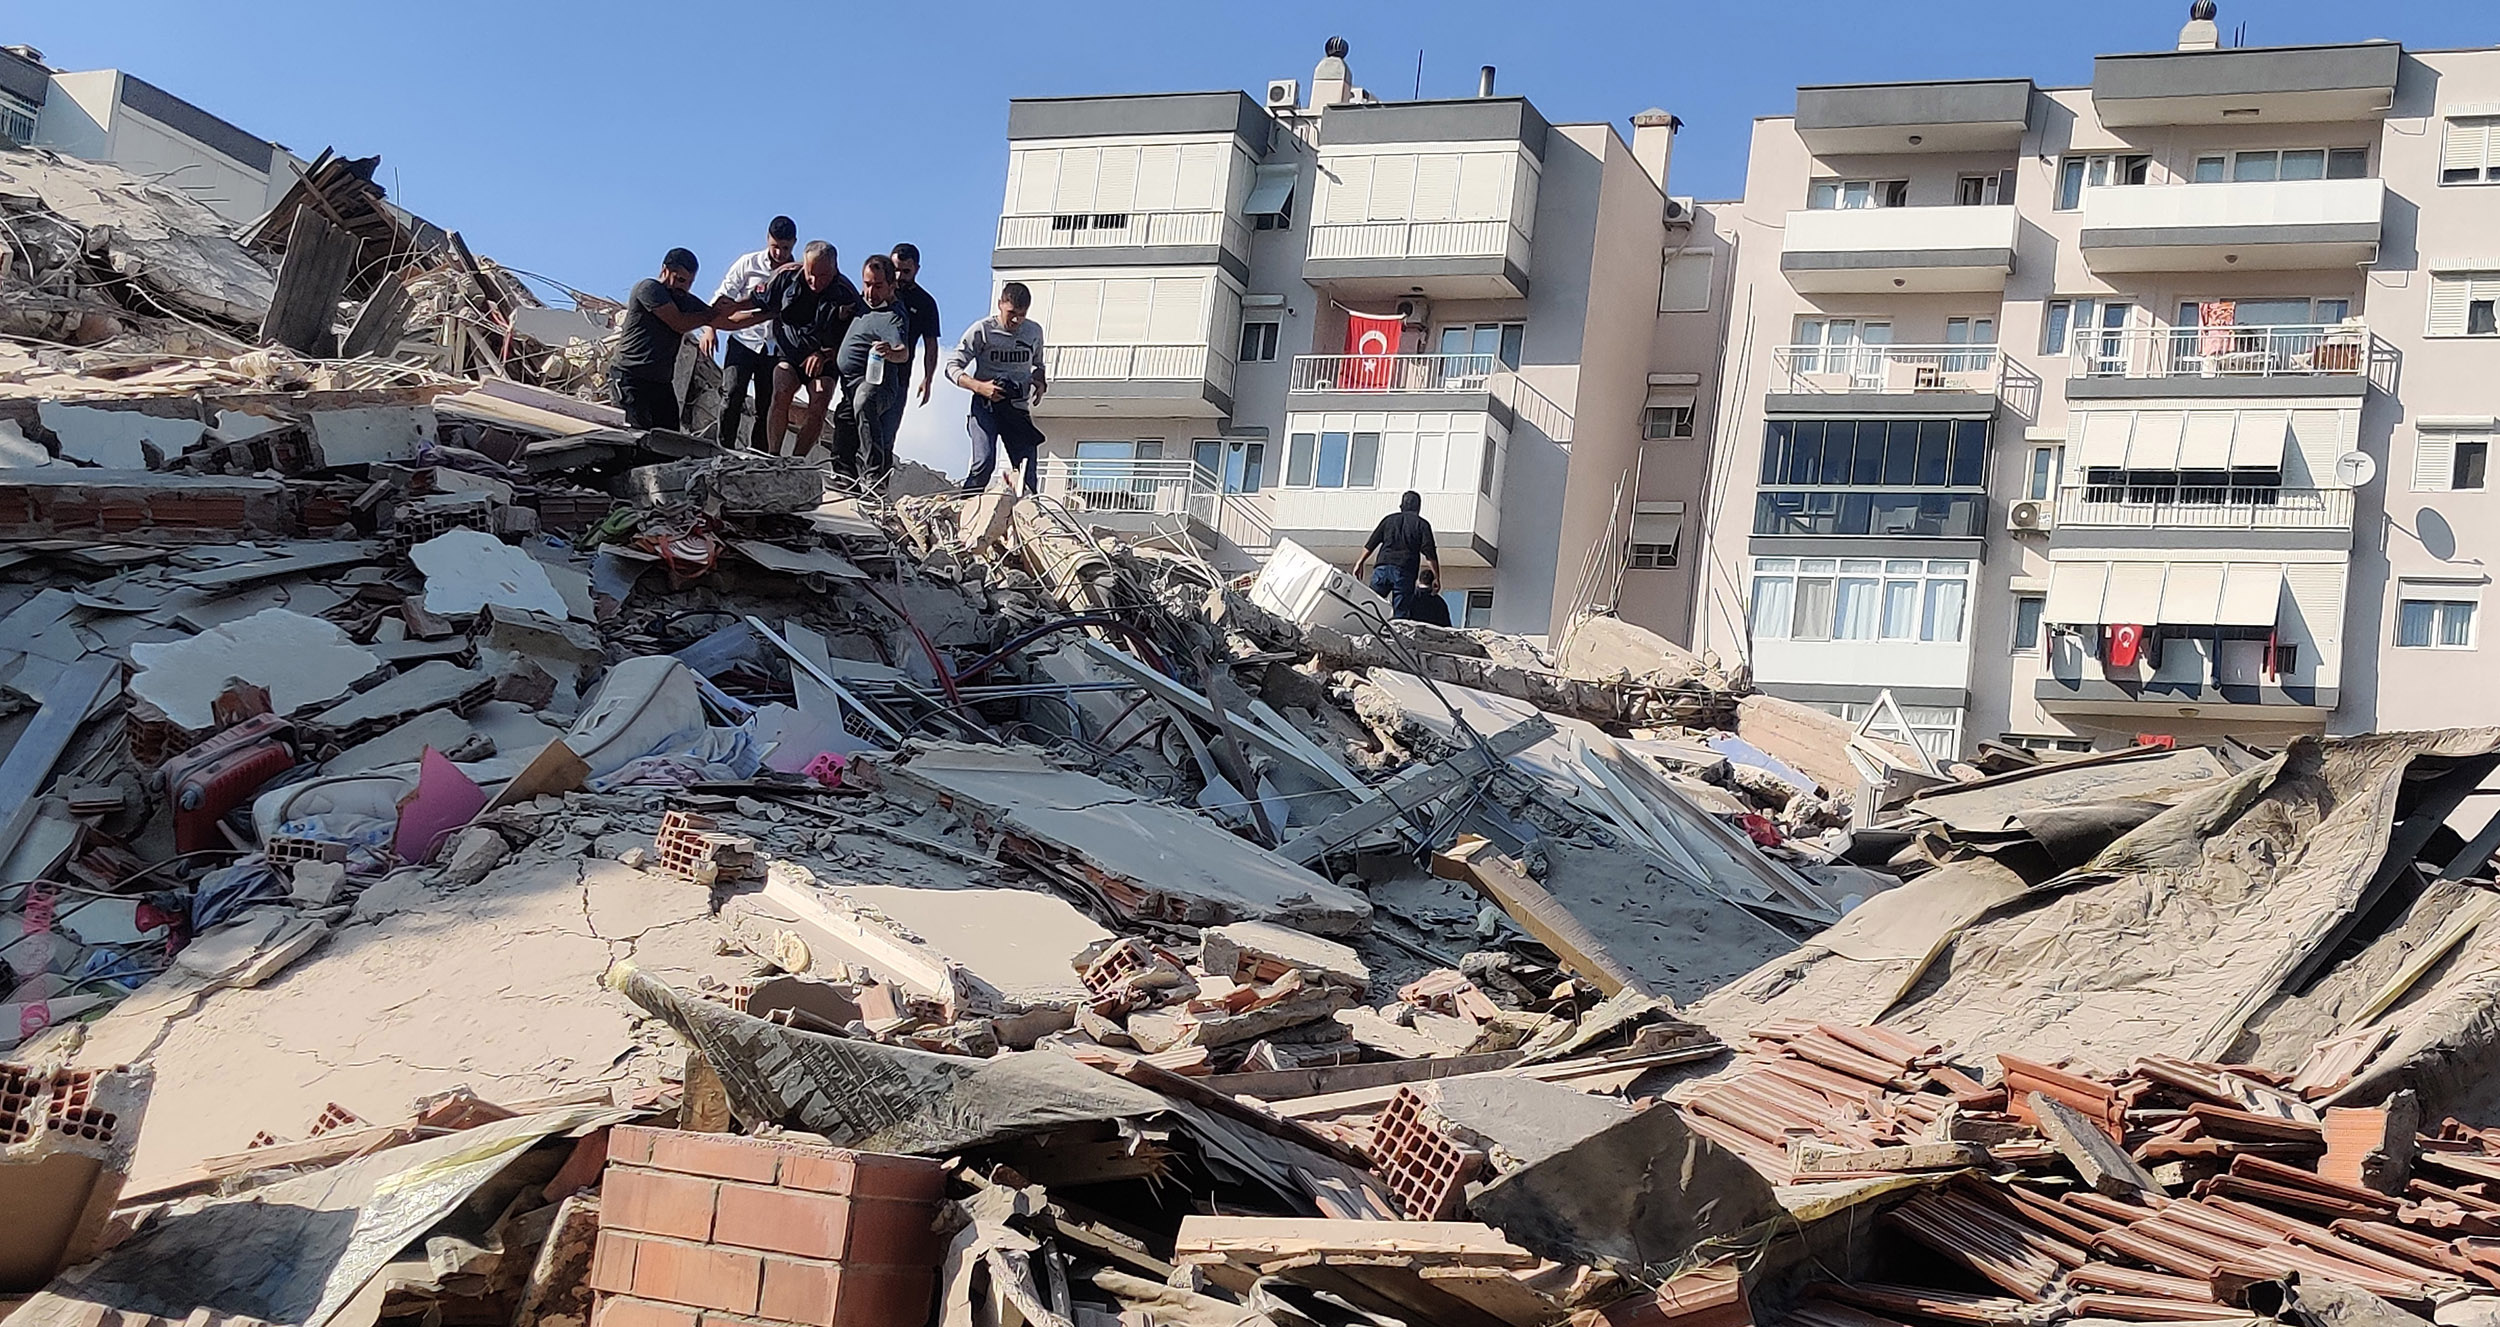 Massive Earthquake of 7.0 magnitude jolts Turkey and Greece, 4 dead